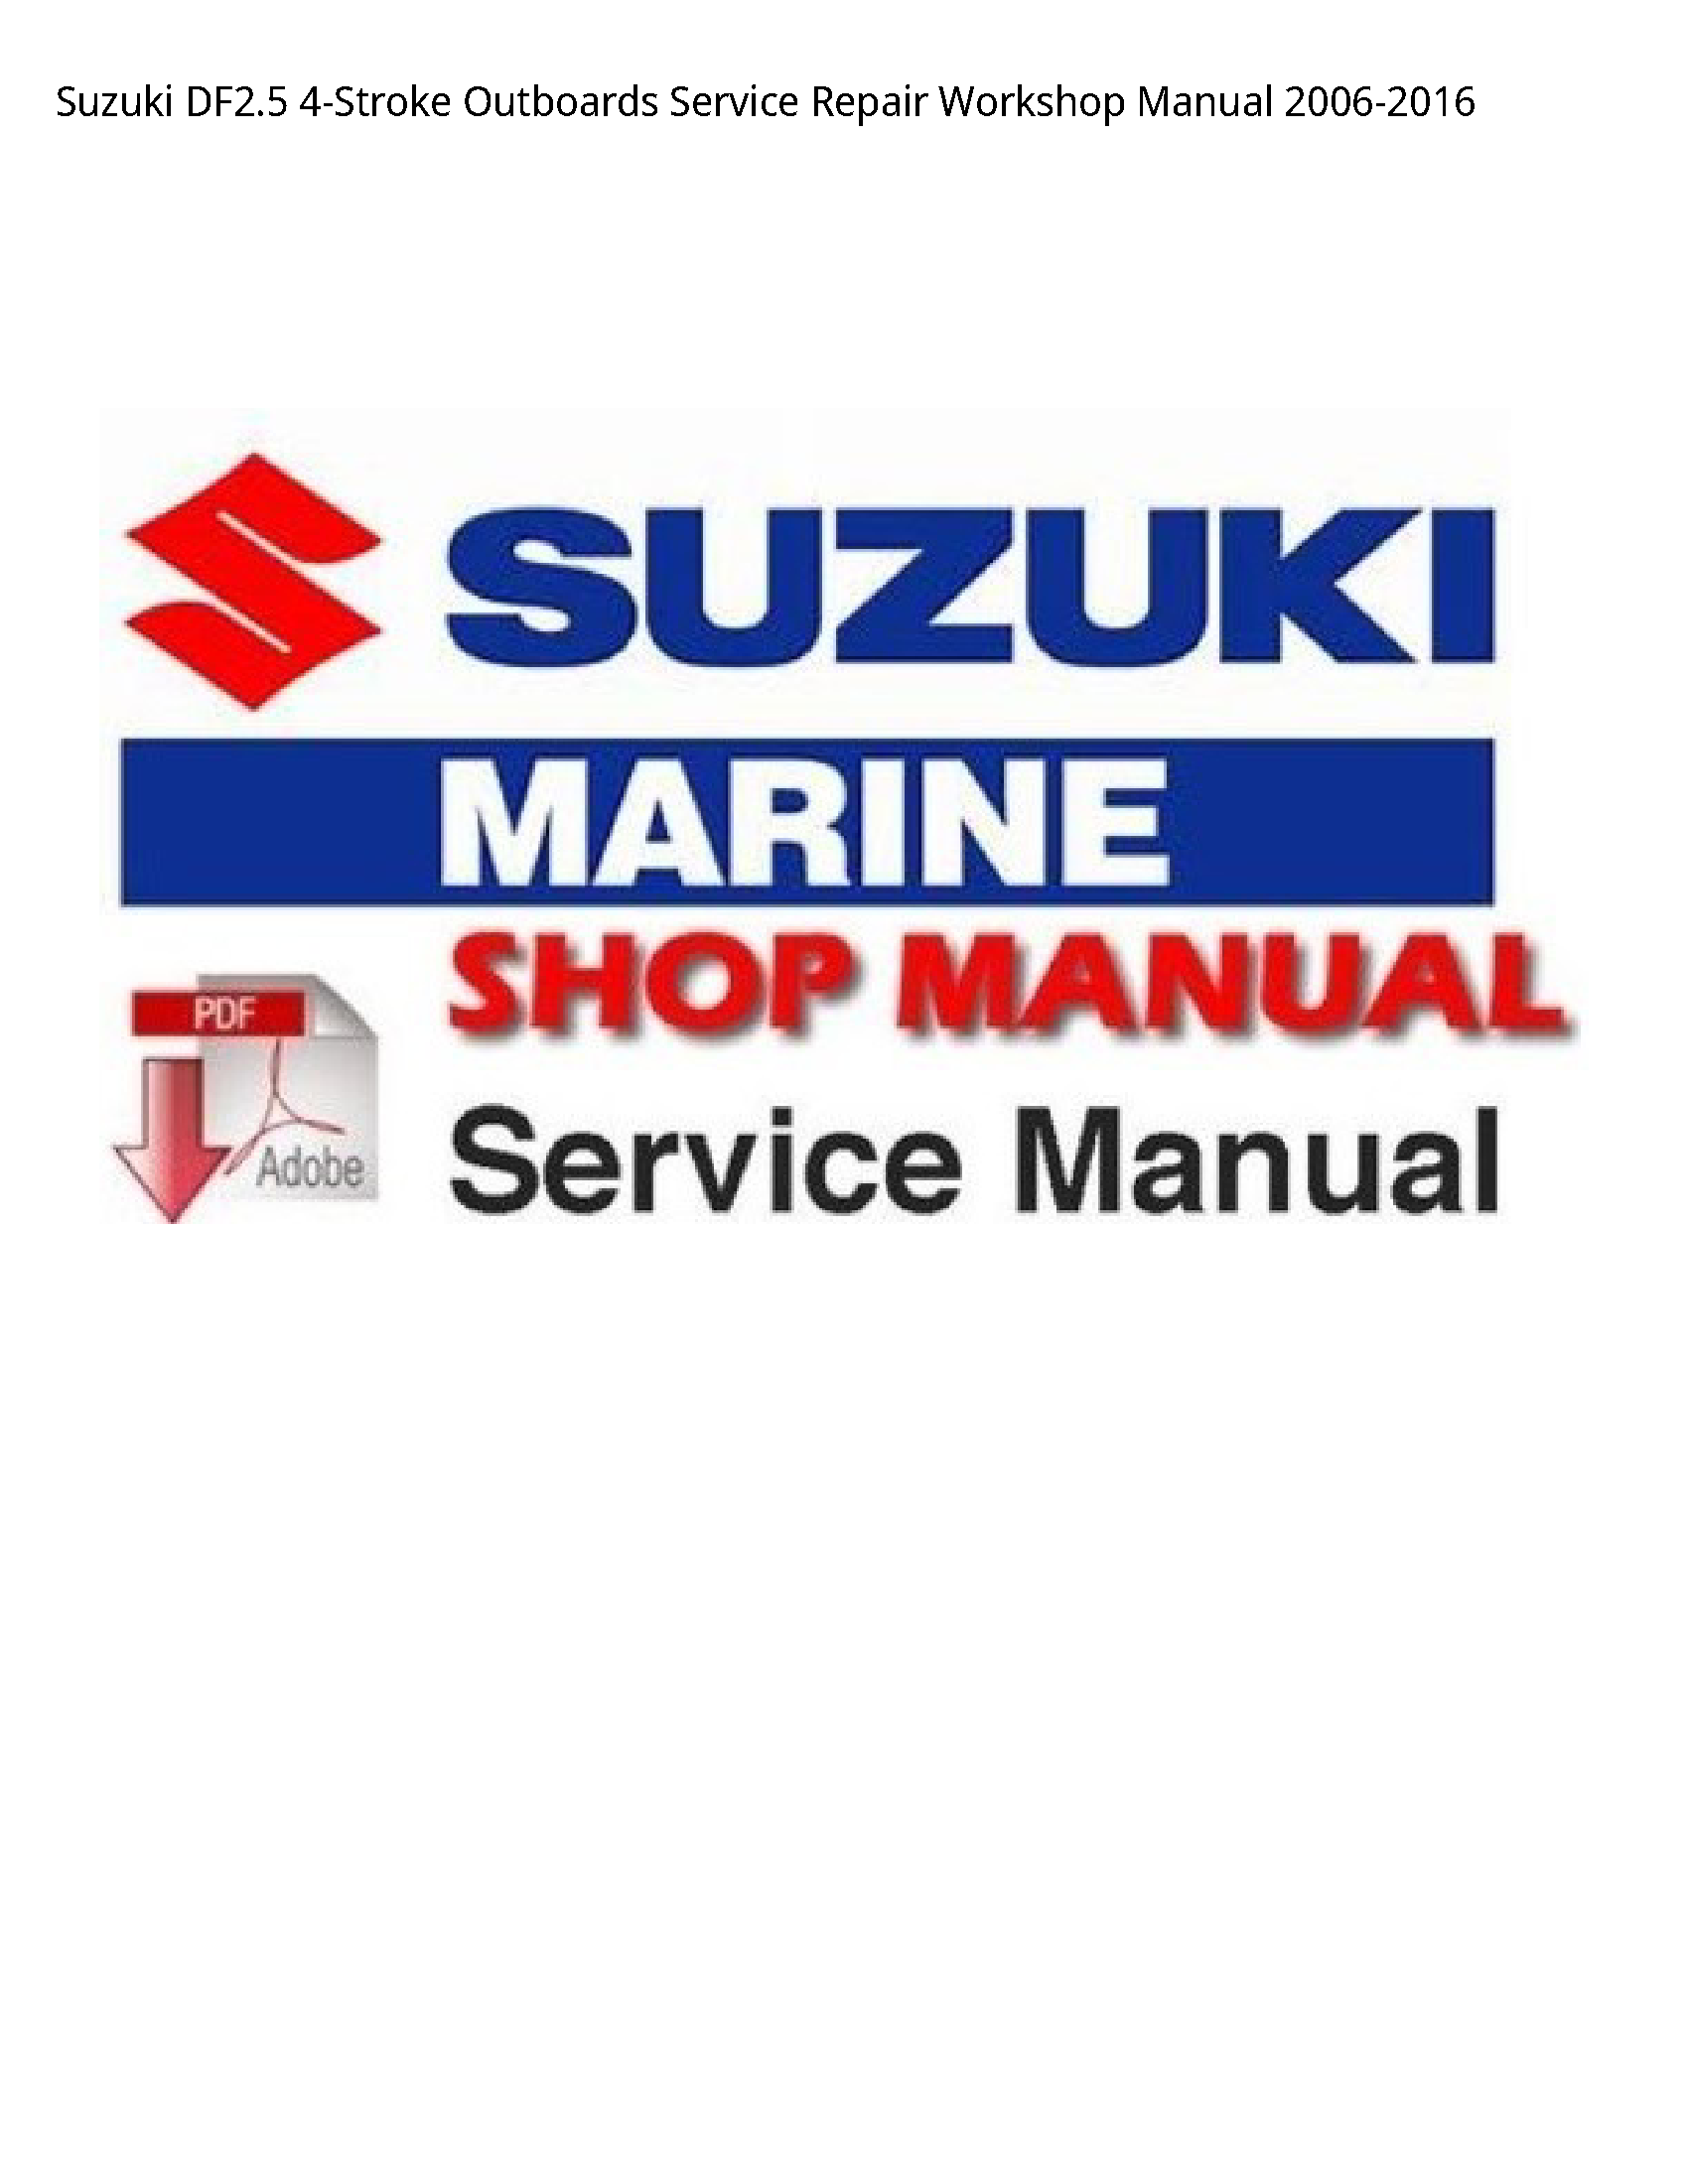 Suzuki DF2.5 Outboards manual